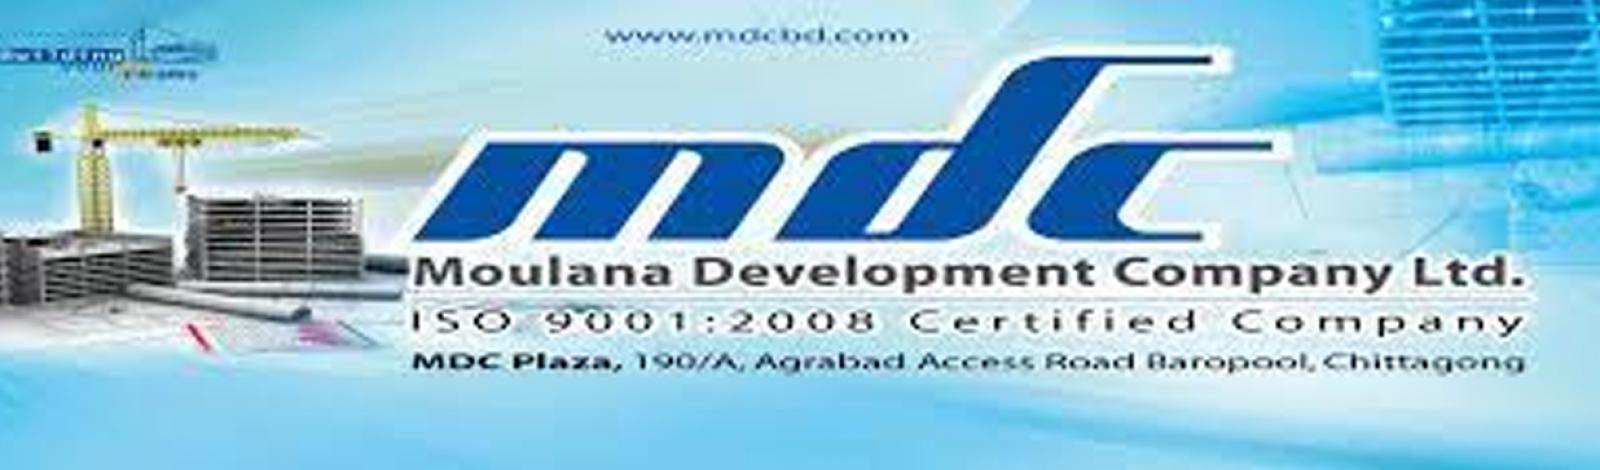 Moulana Development Company Limited banner